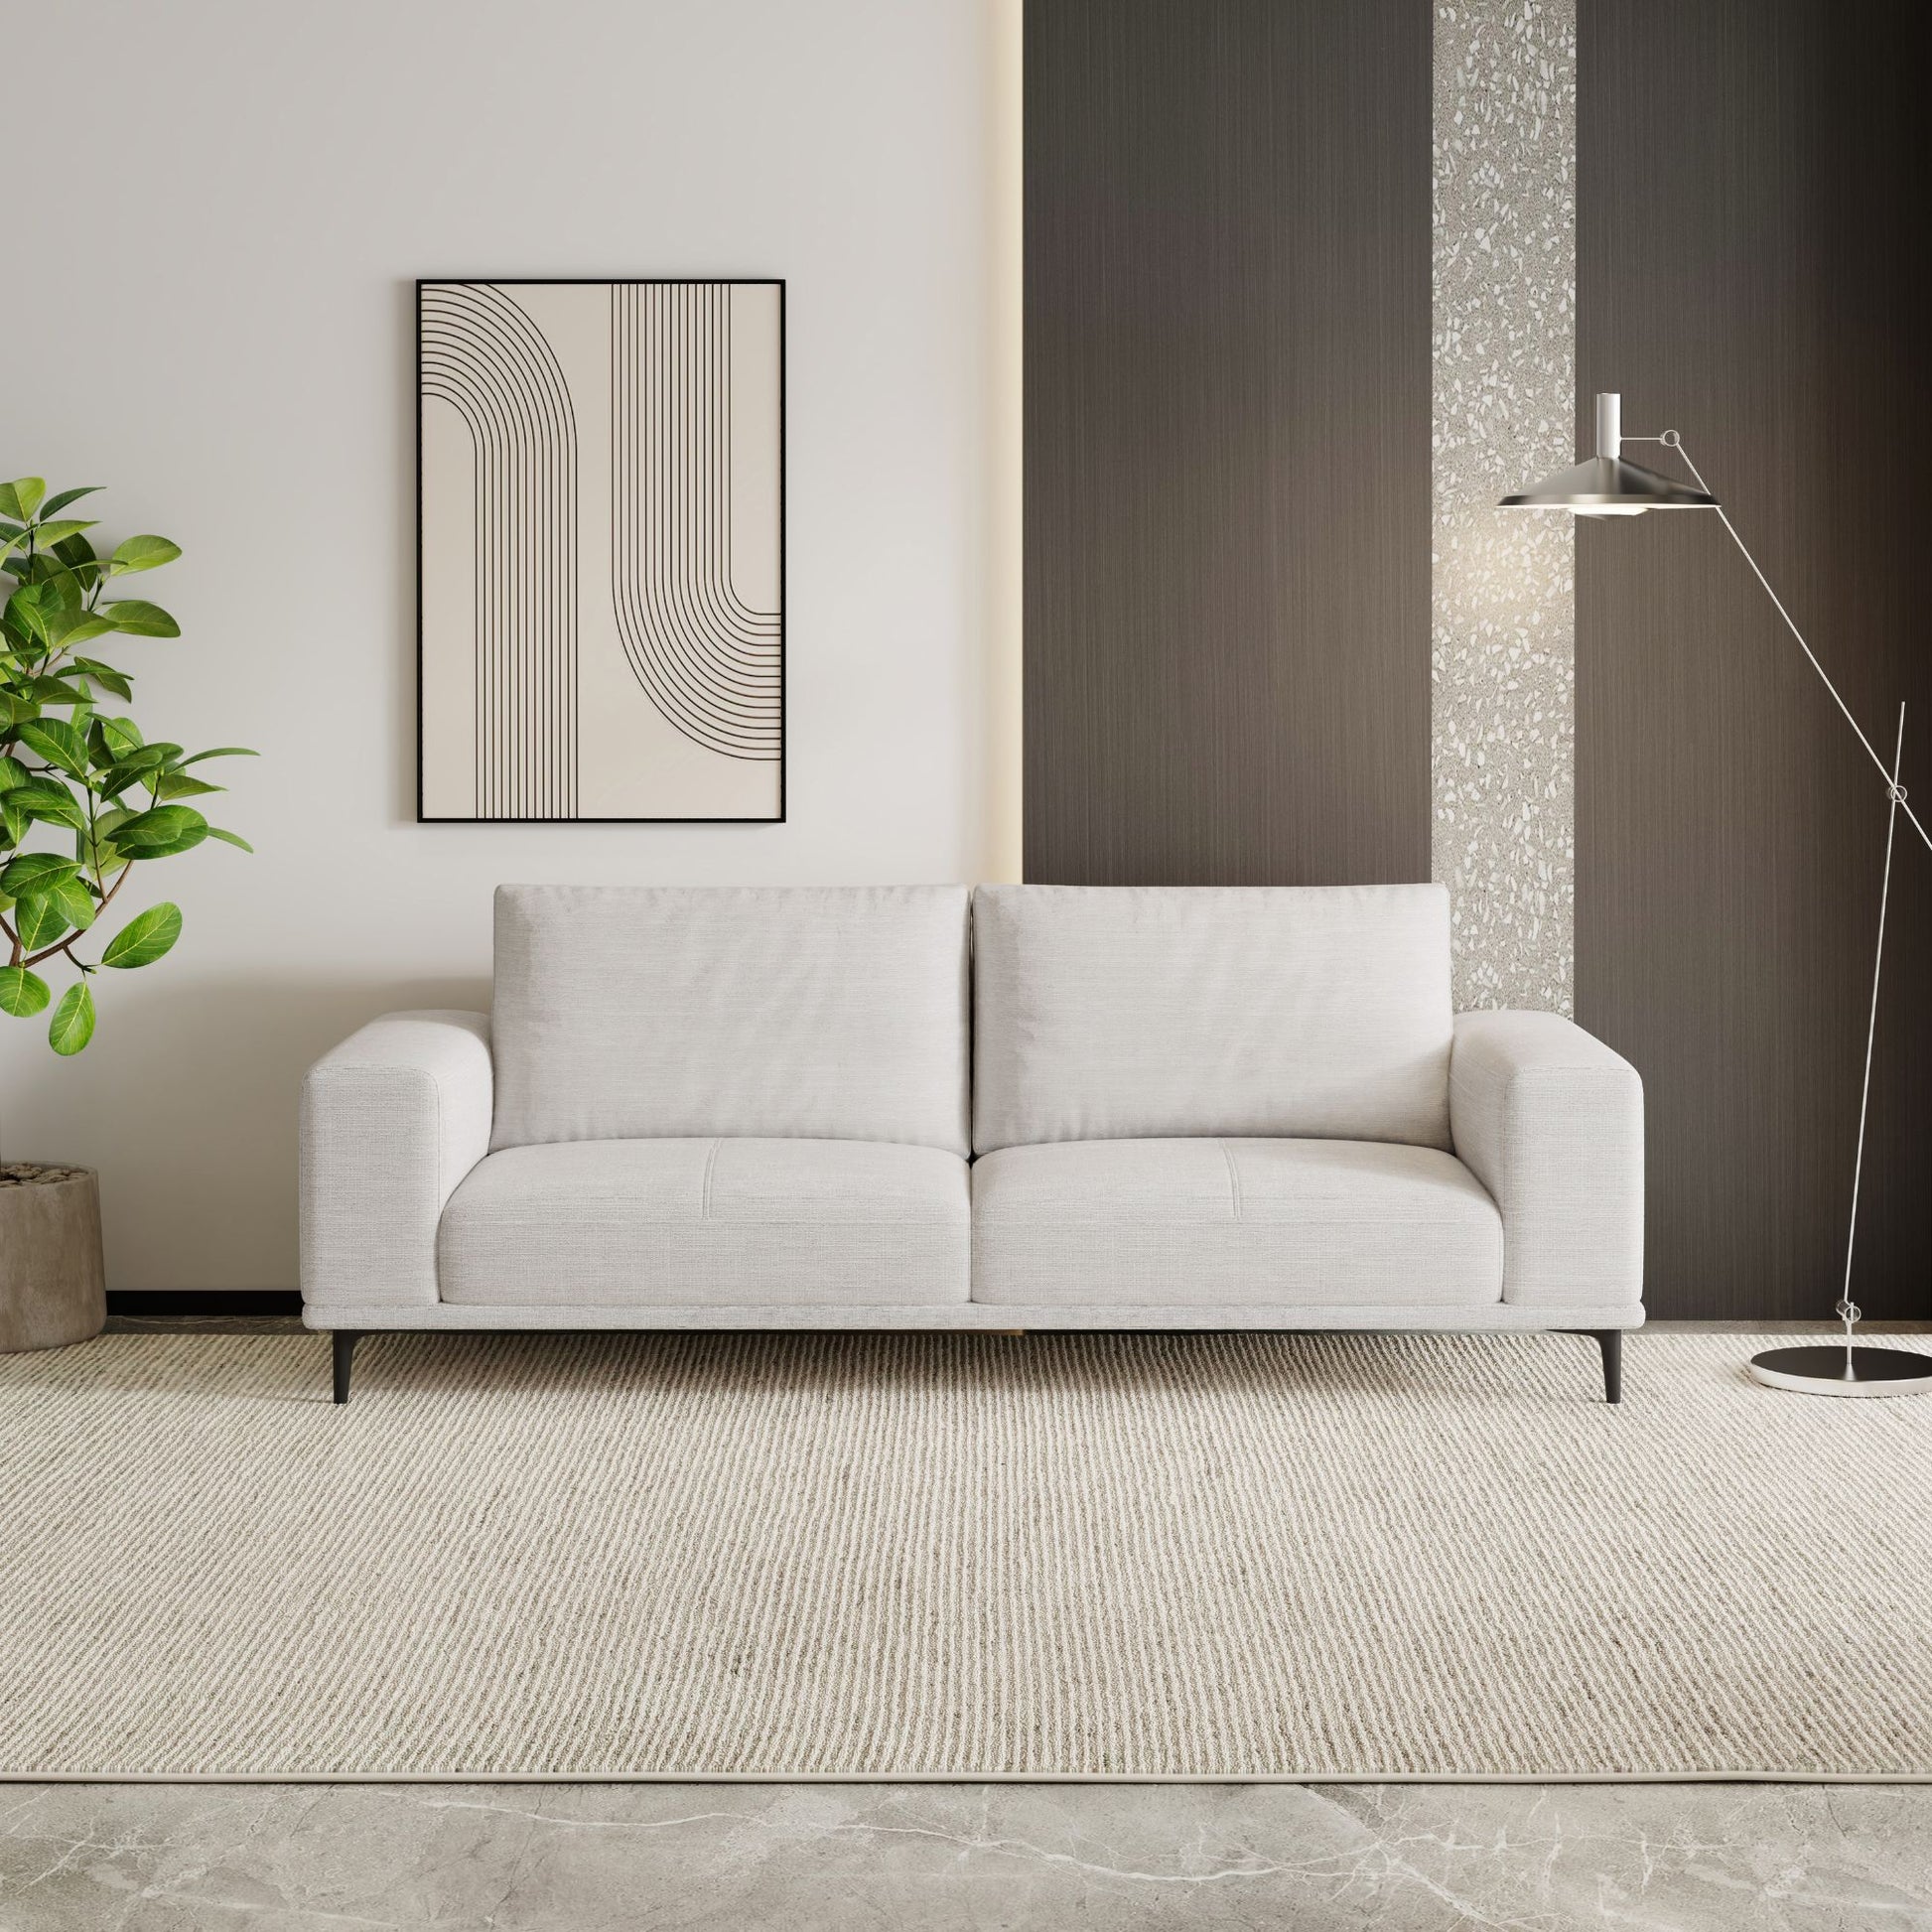 Calm white polyester blend fabric sofa